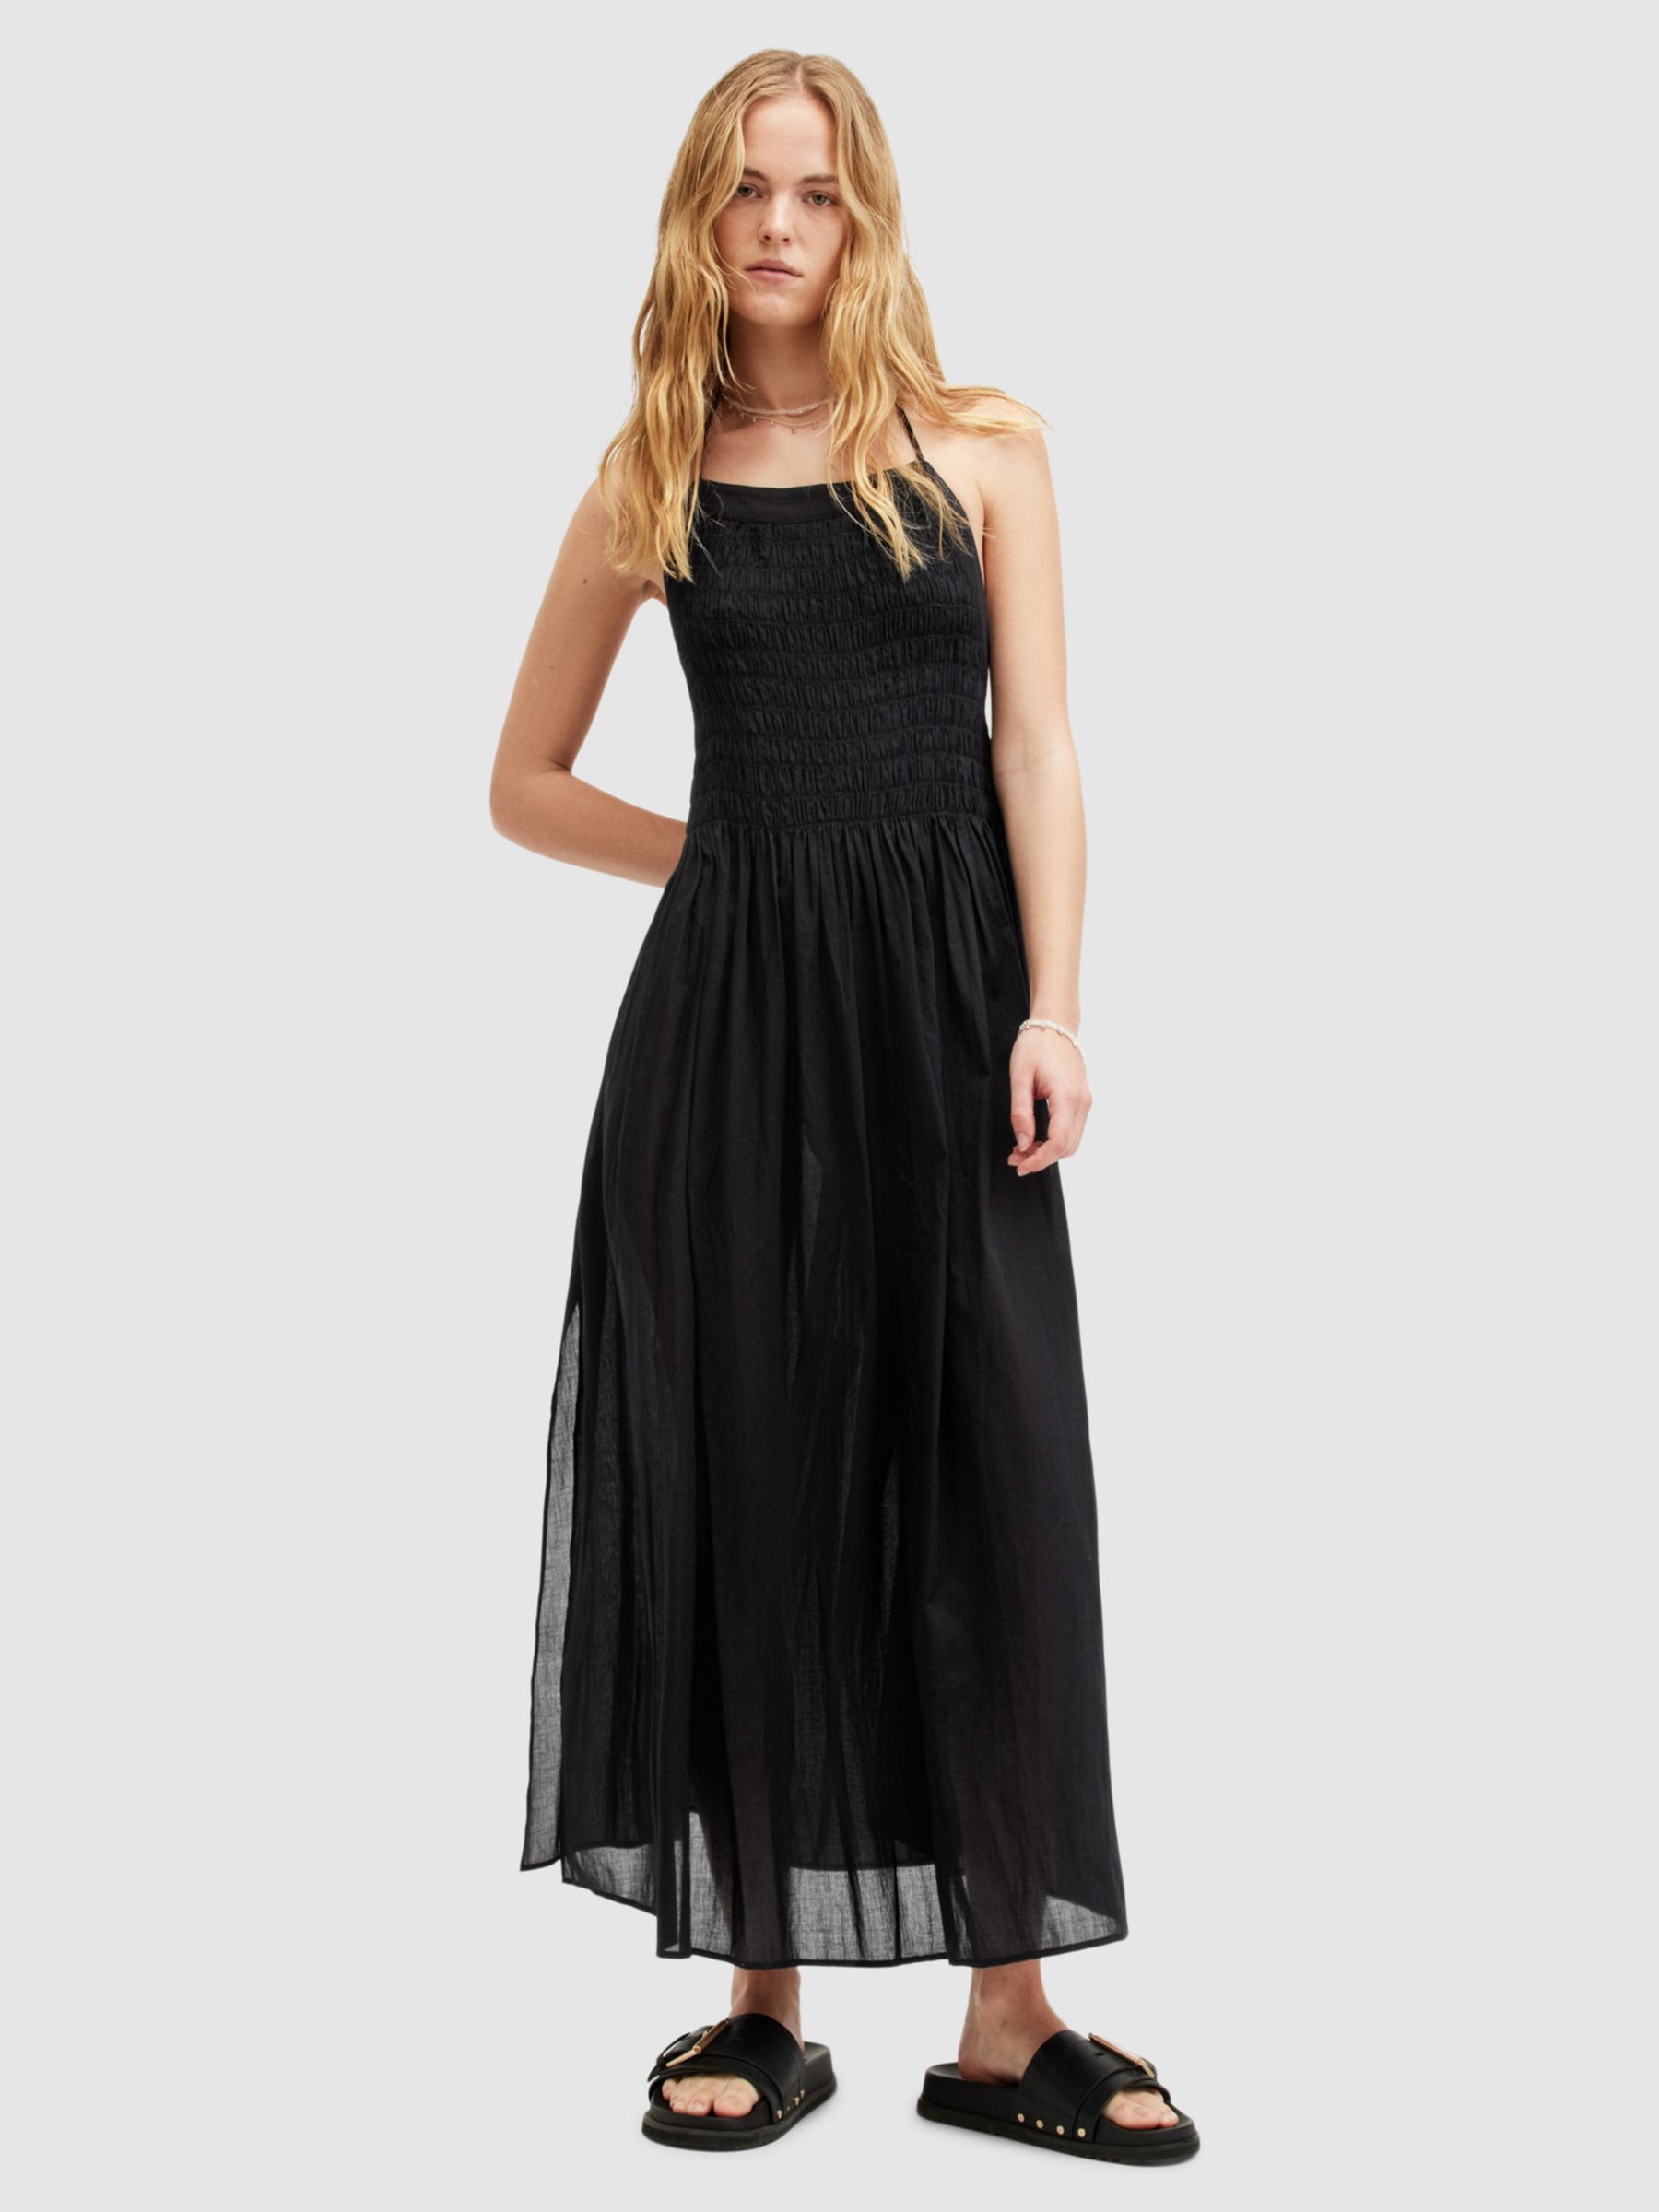 AllSaints Iris Shirred Cotton Halterneck Sun Dress, Black, 10